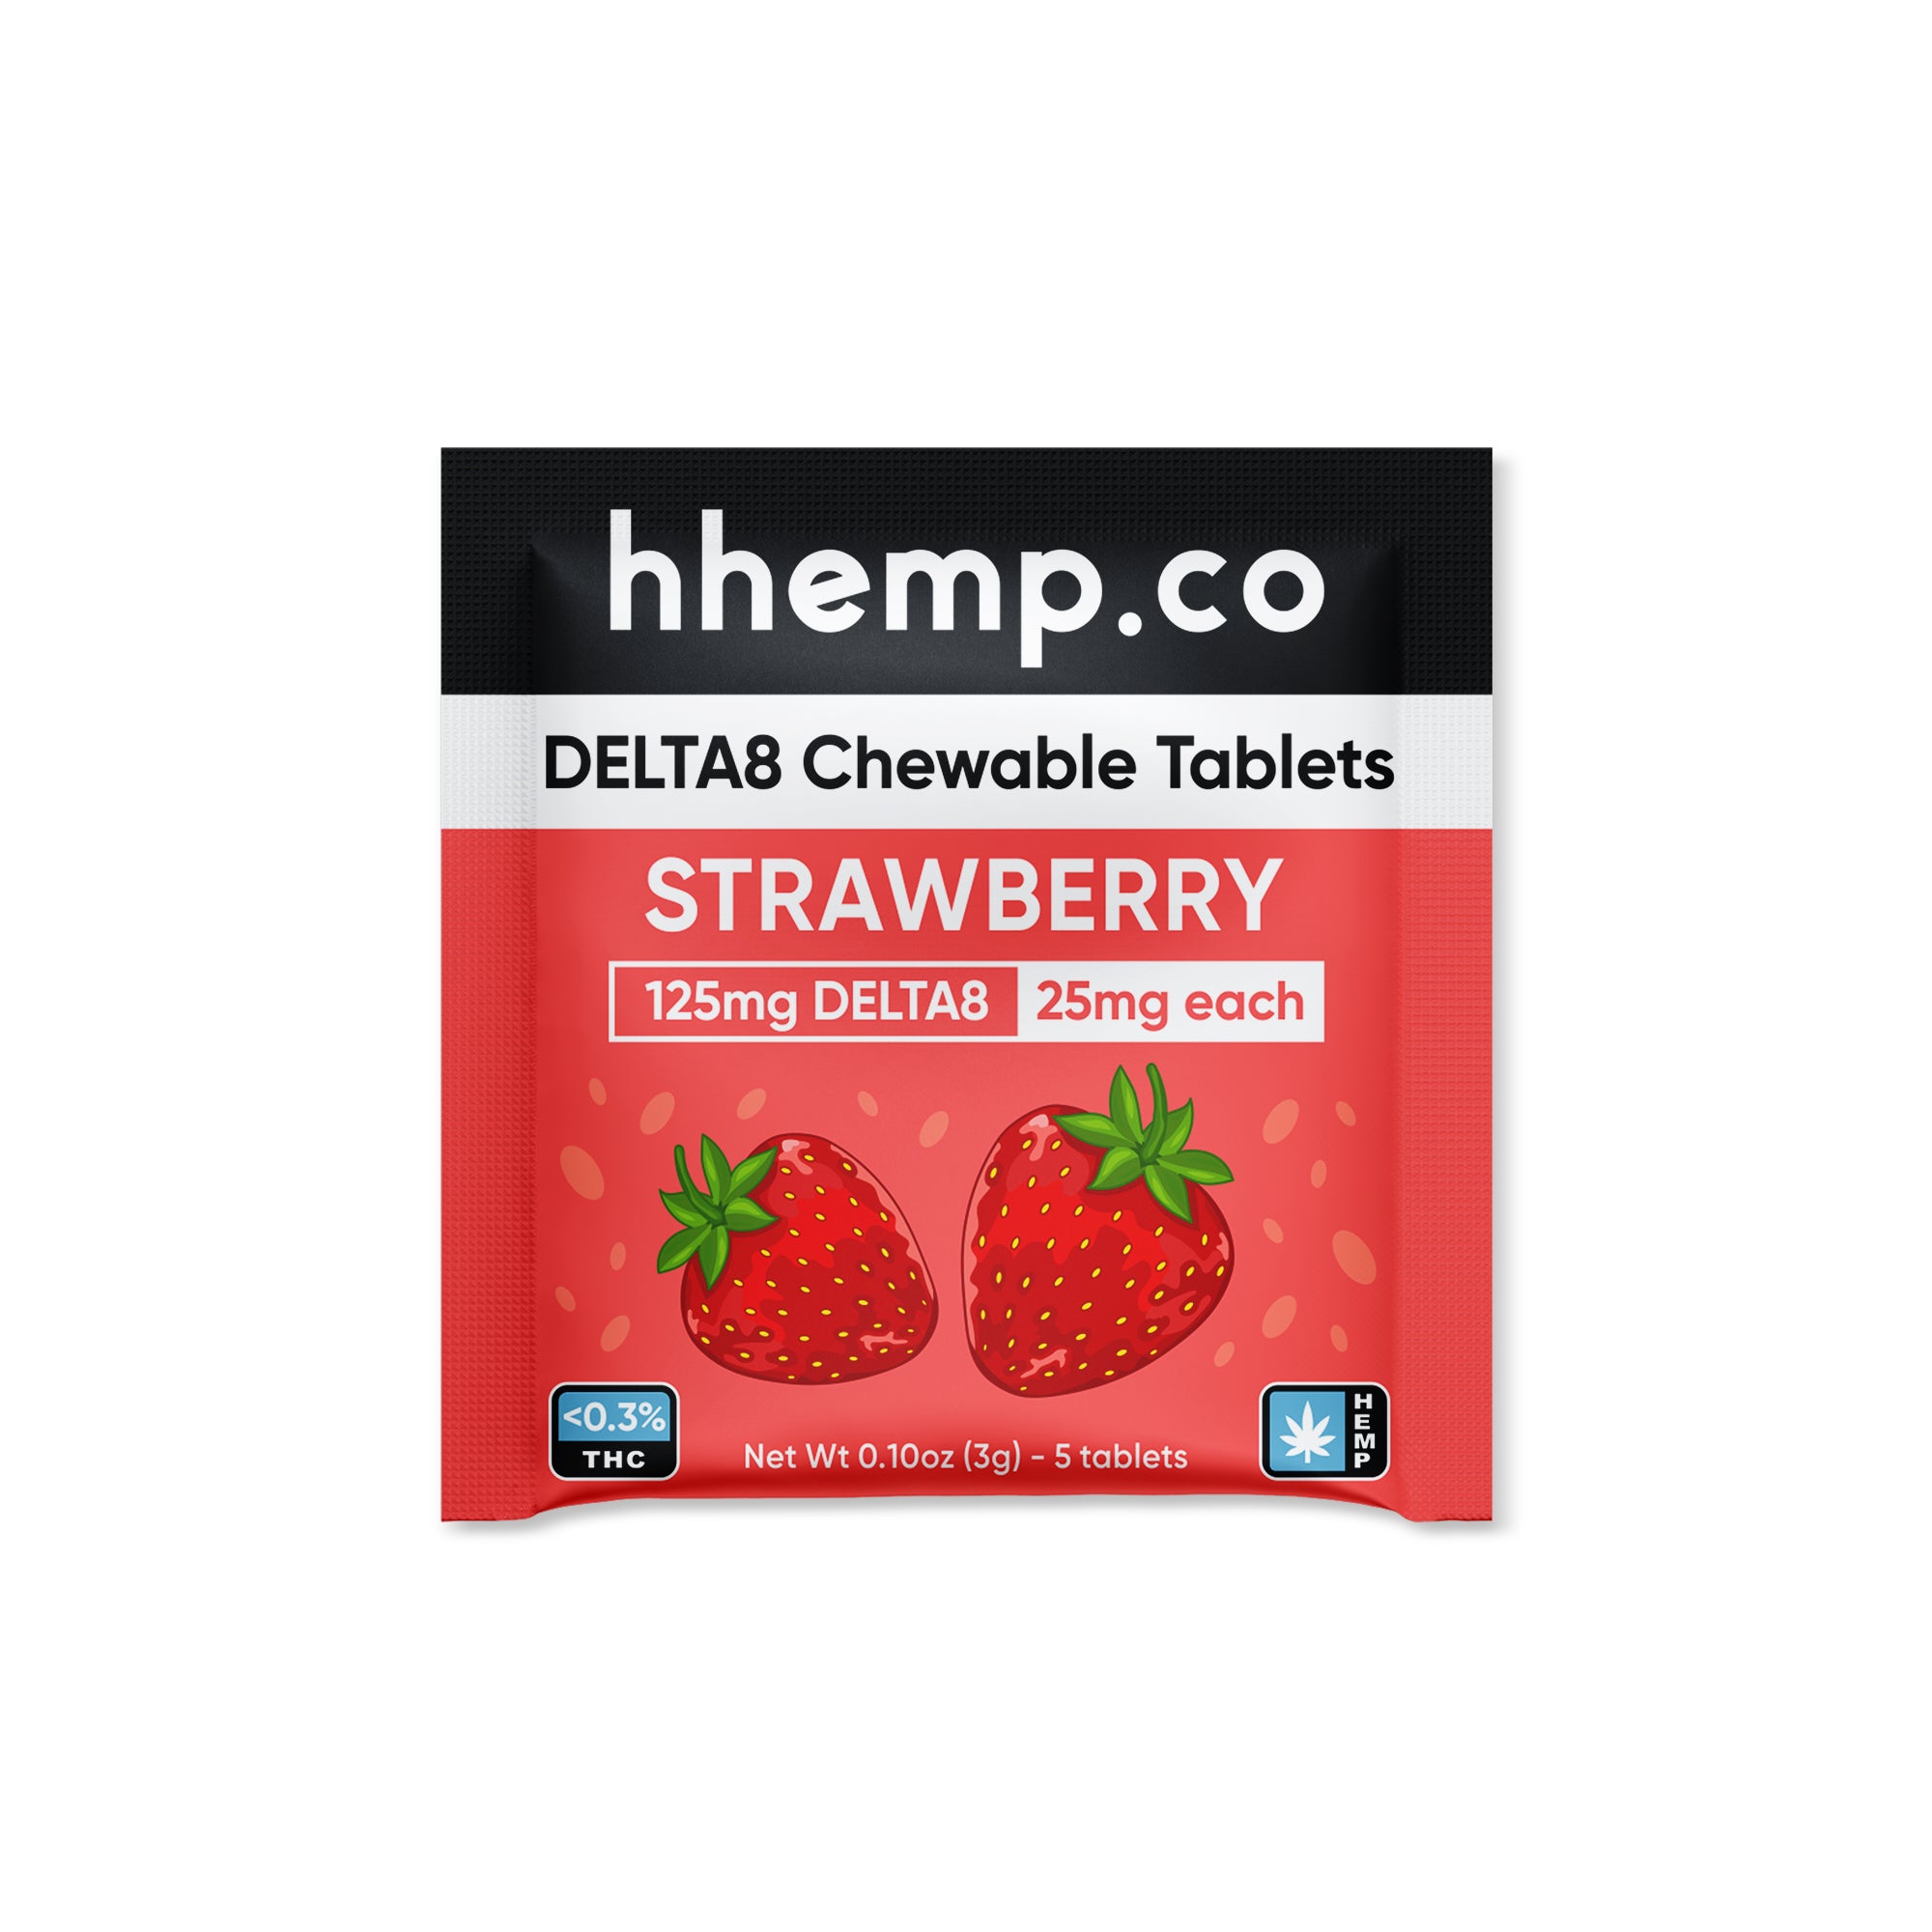 hhemp.co Delta 8 Chewable - Strawberry